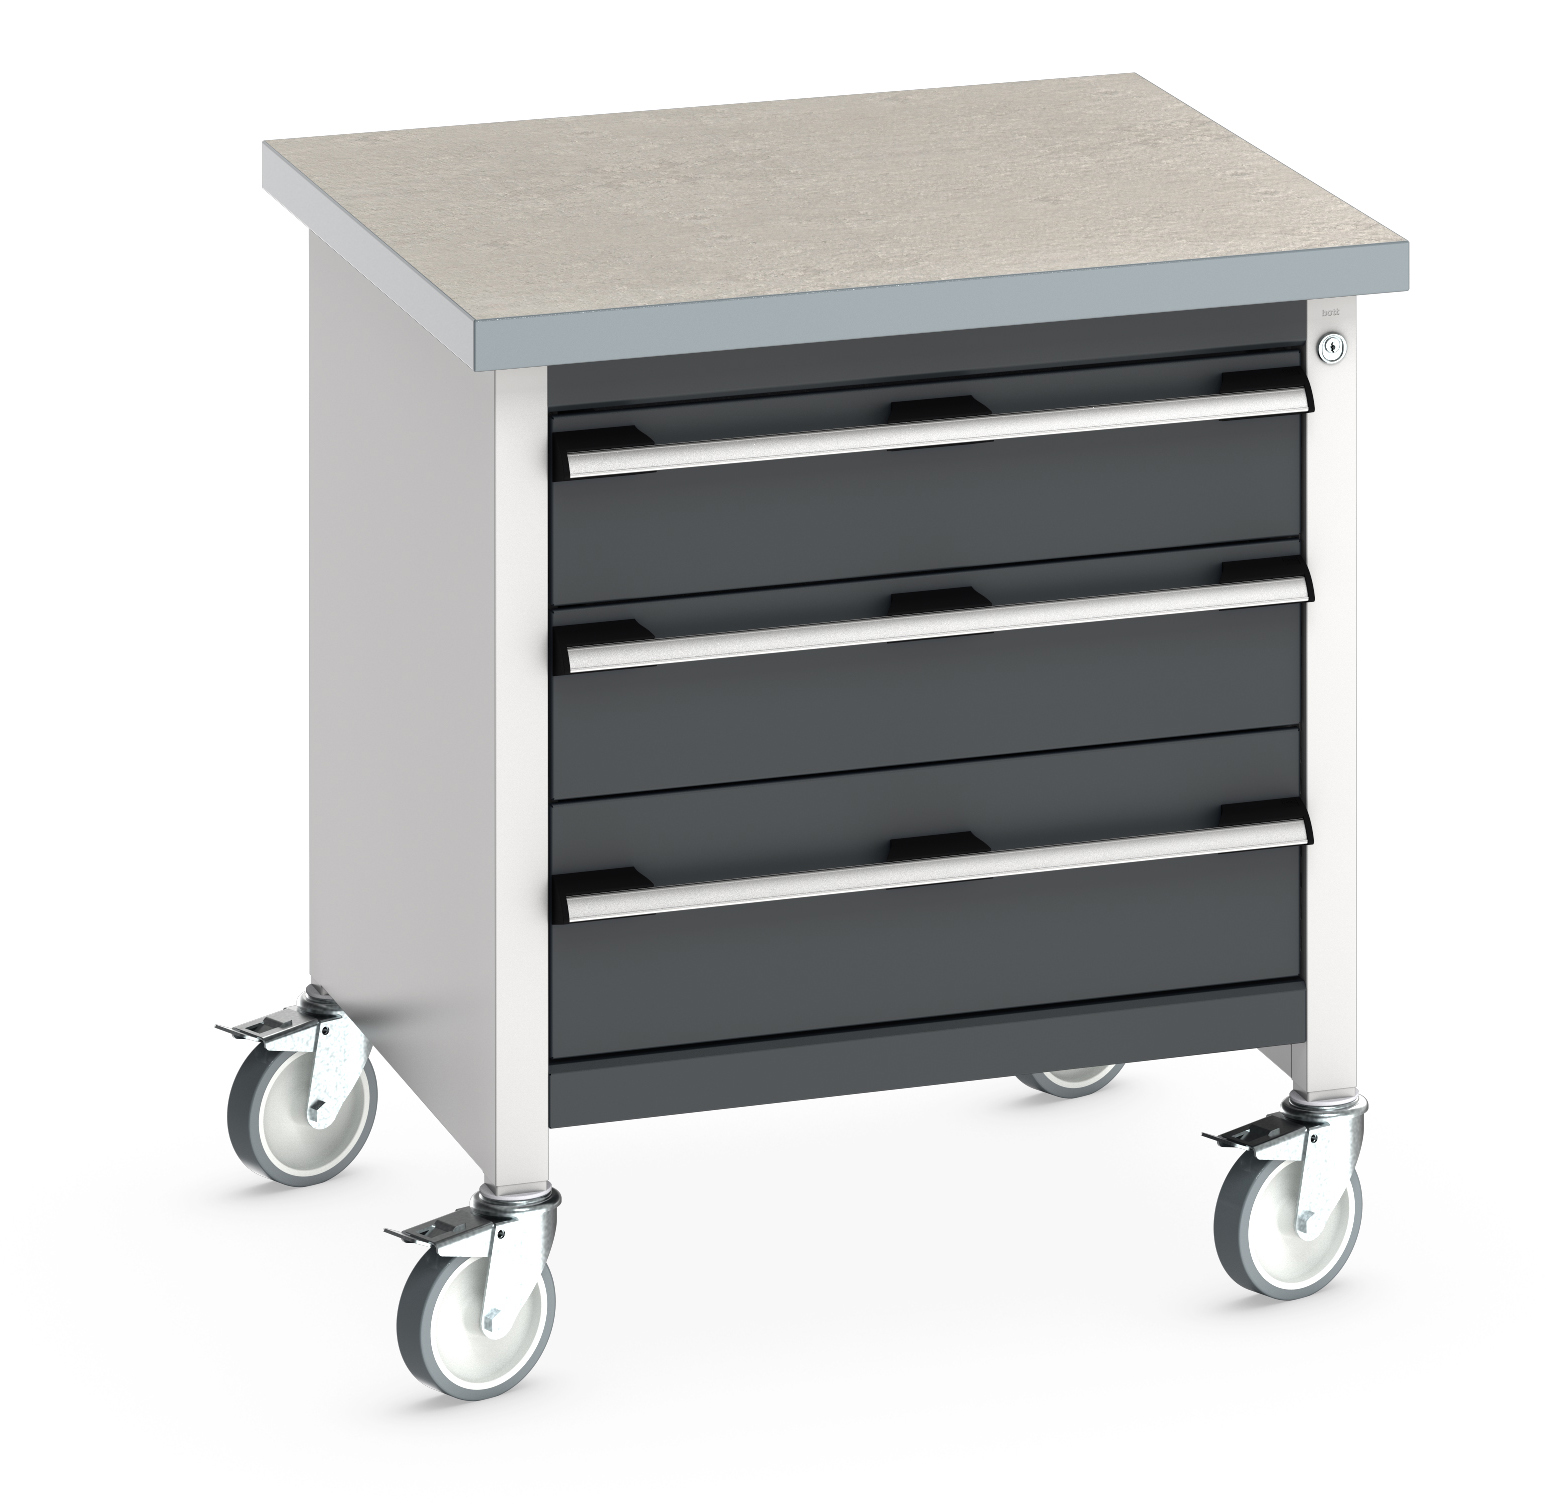 Bott Cubio Mobile Storage Bench With 3 Drawer Cabinet - 41002093.19V